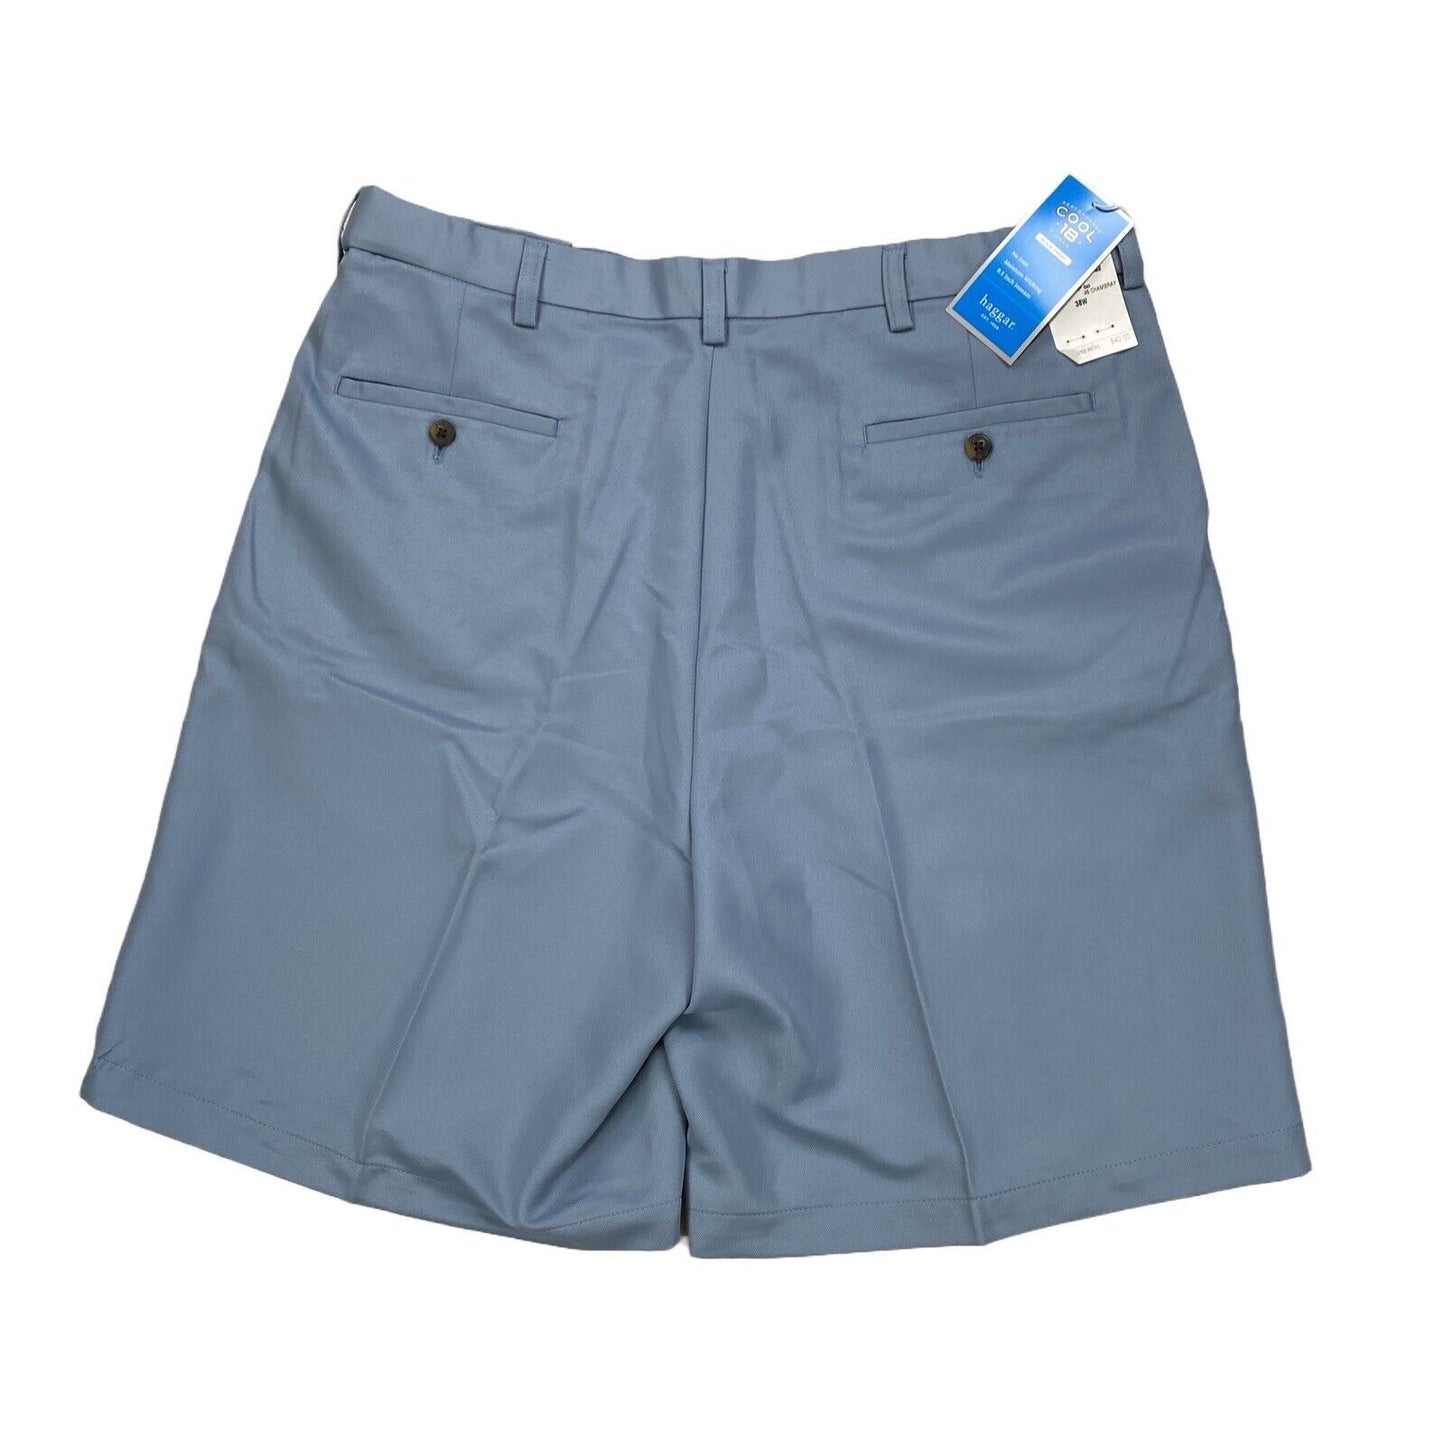 NEW Haggar Men's Light Blue Cool 18 Plain Front Shorts - 38